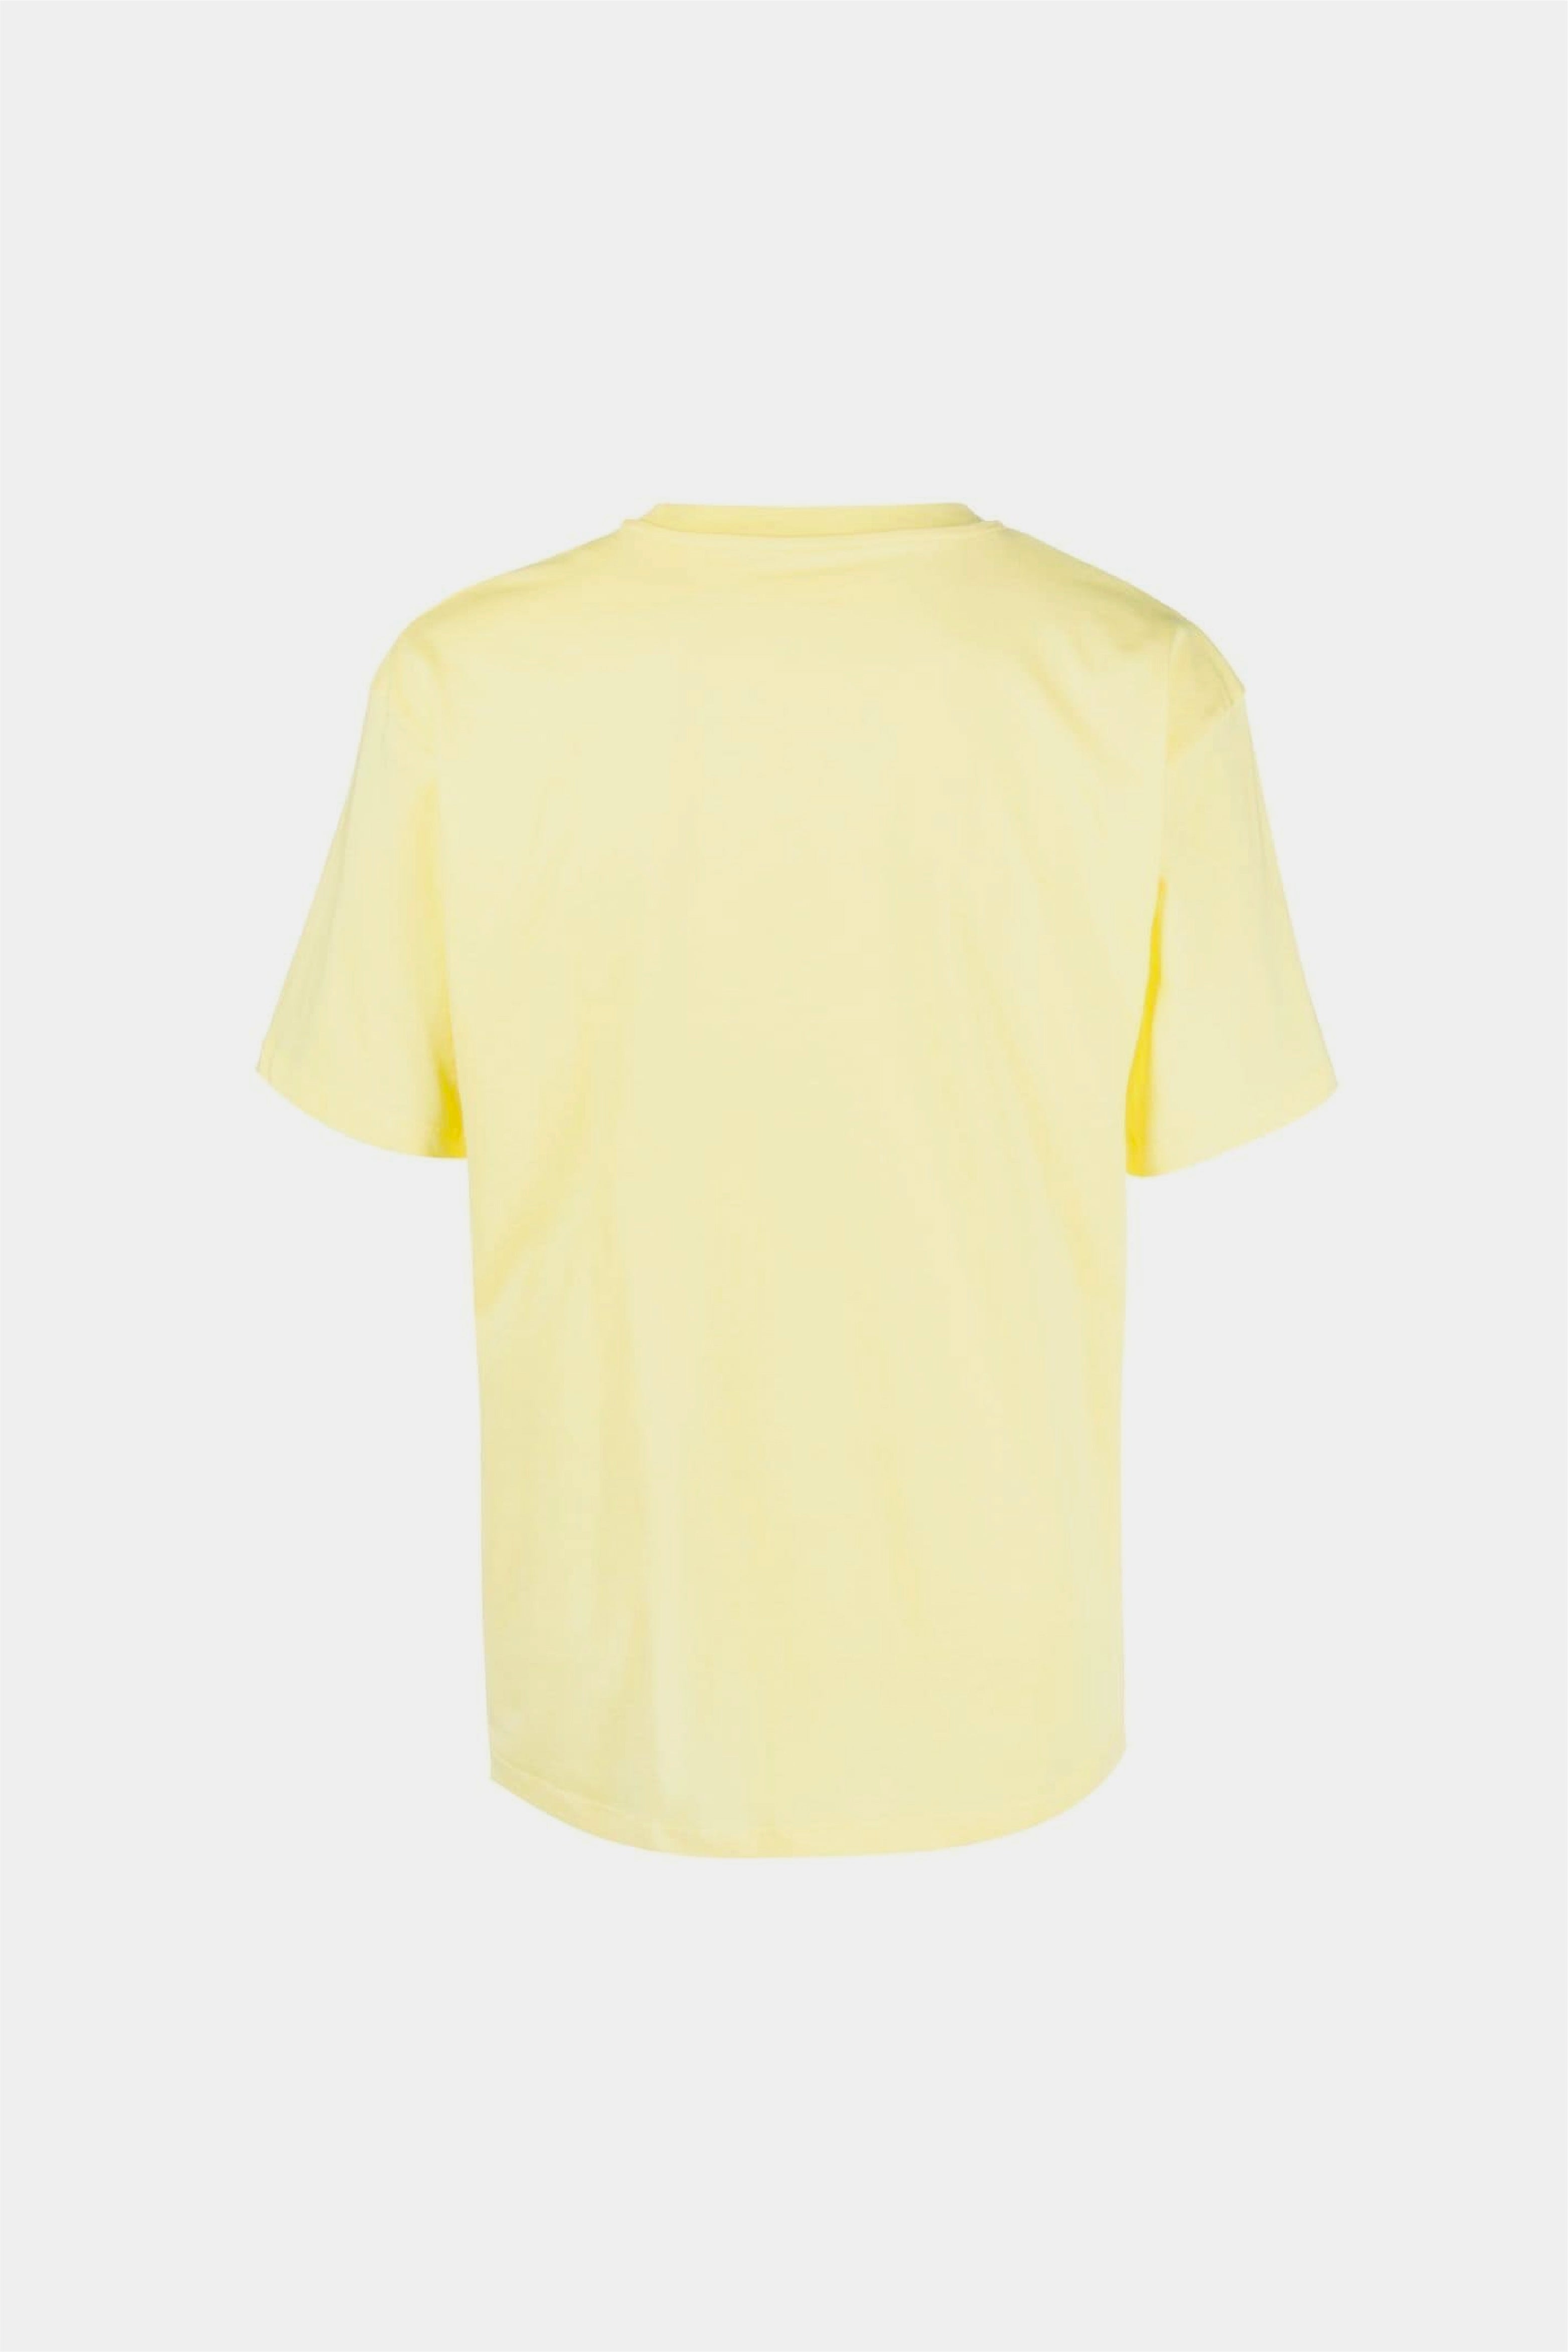 Selectshop FRAME - RASSVET Skull Tee T-Shirts Dubai